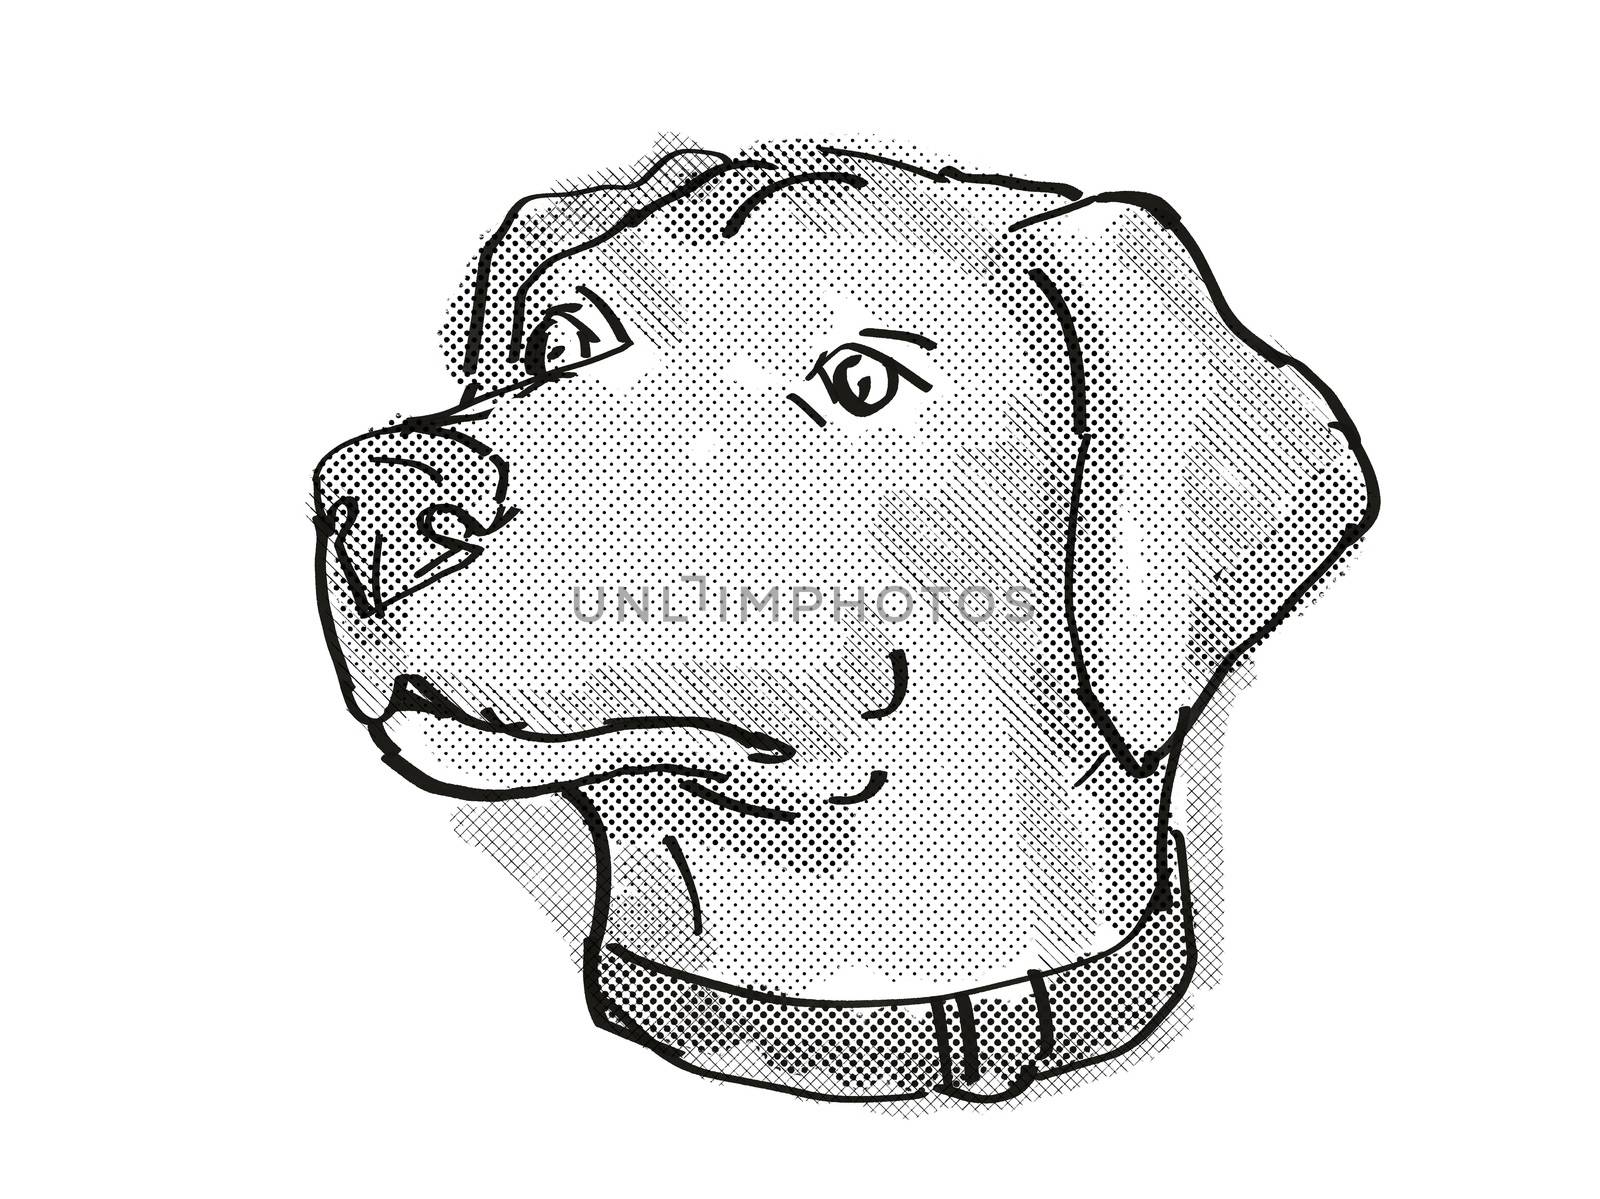 Blue Lacy Dog Breed Cartoon Retro Drawing by patrimonio